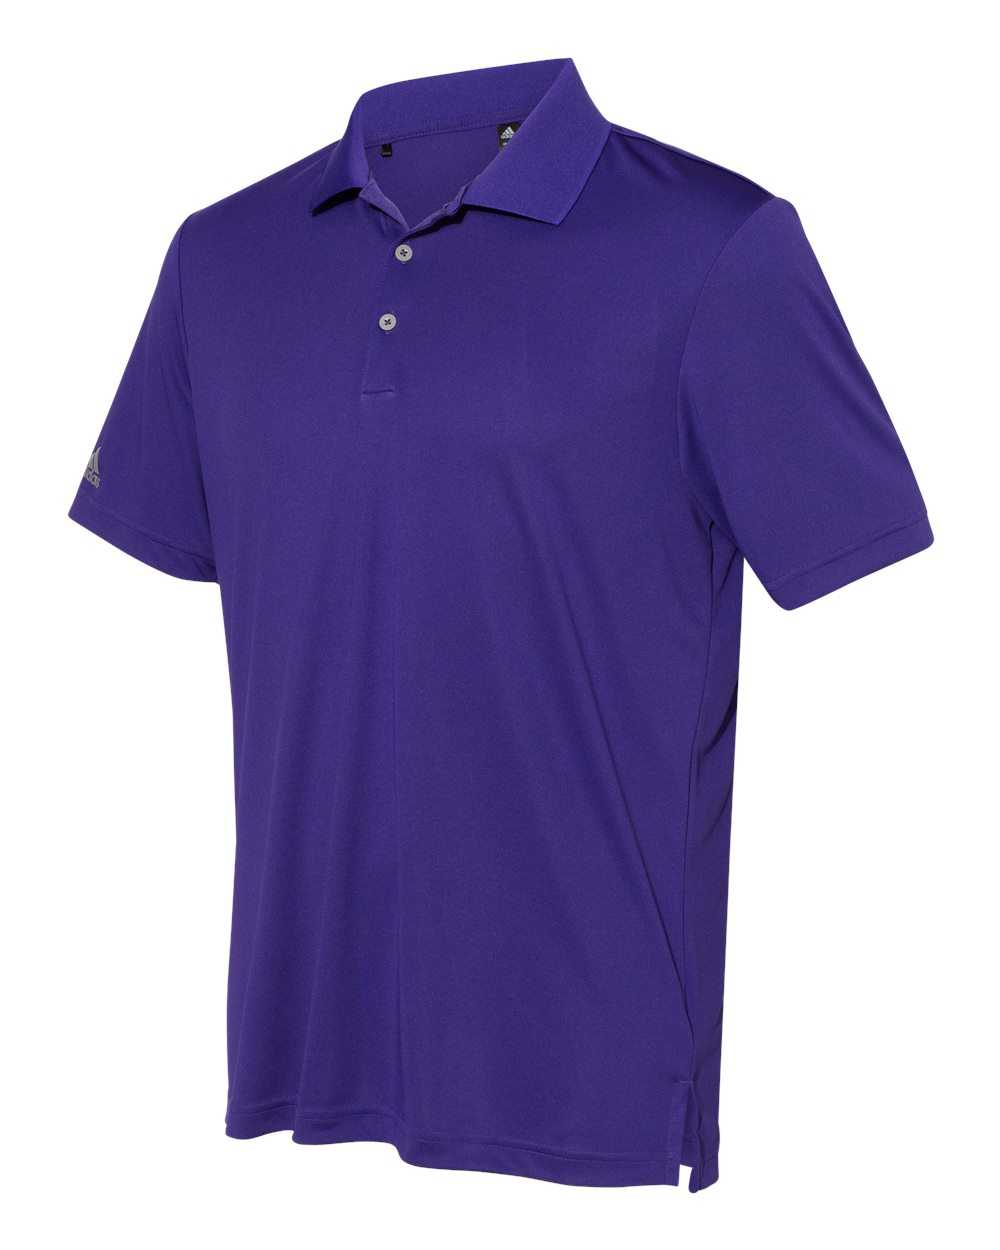 Adidas A230 Performance Sport Shirt - Collegiate Purple - HIT a Double